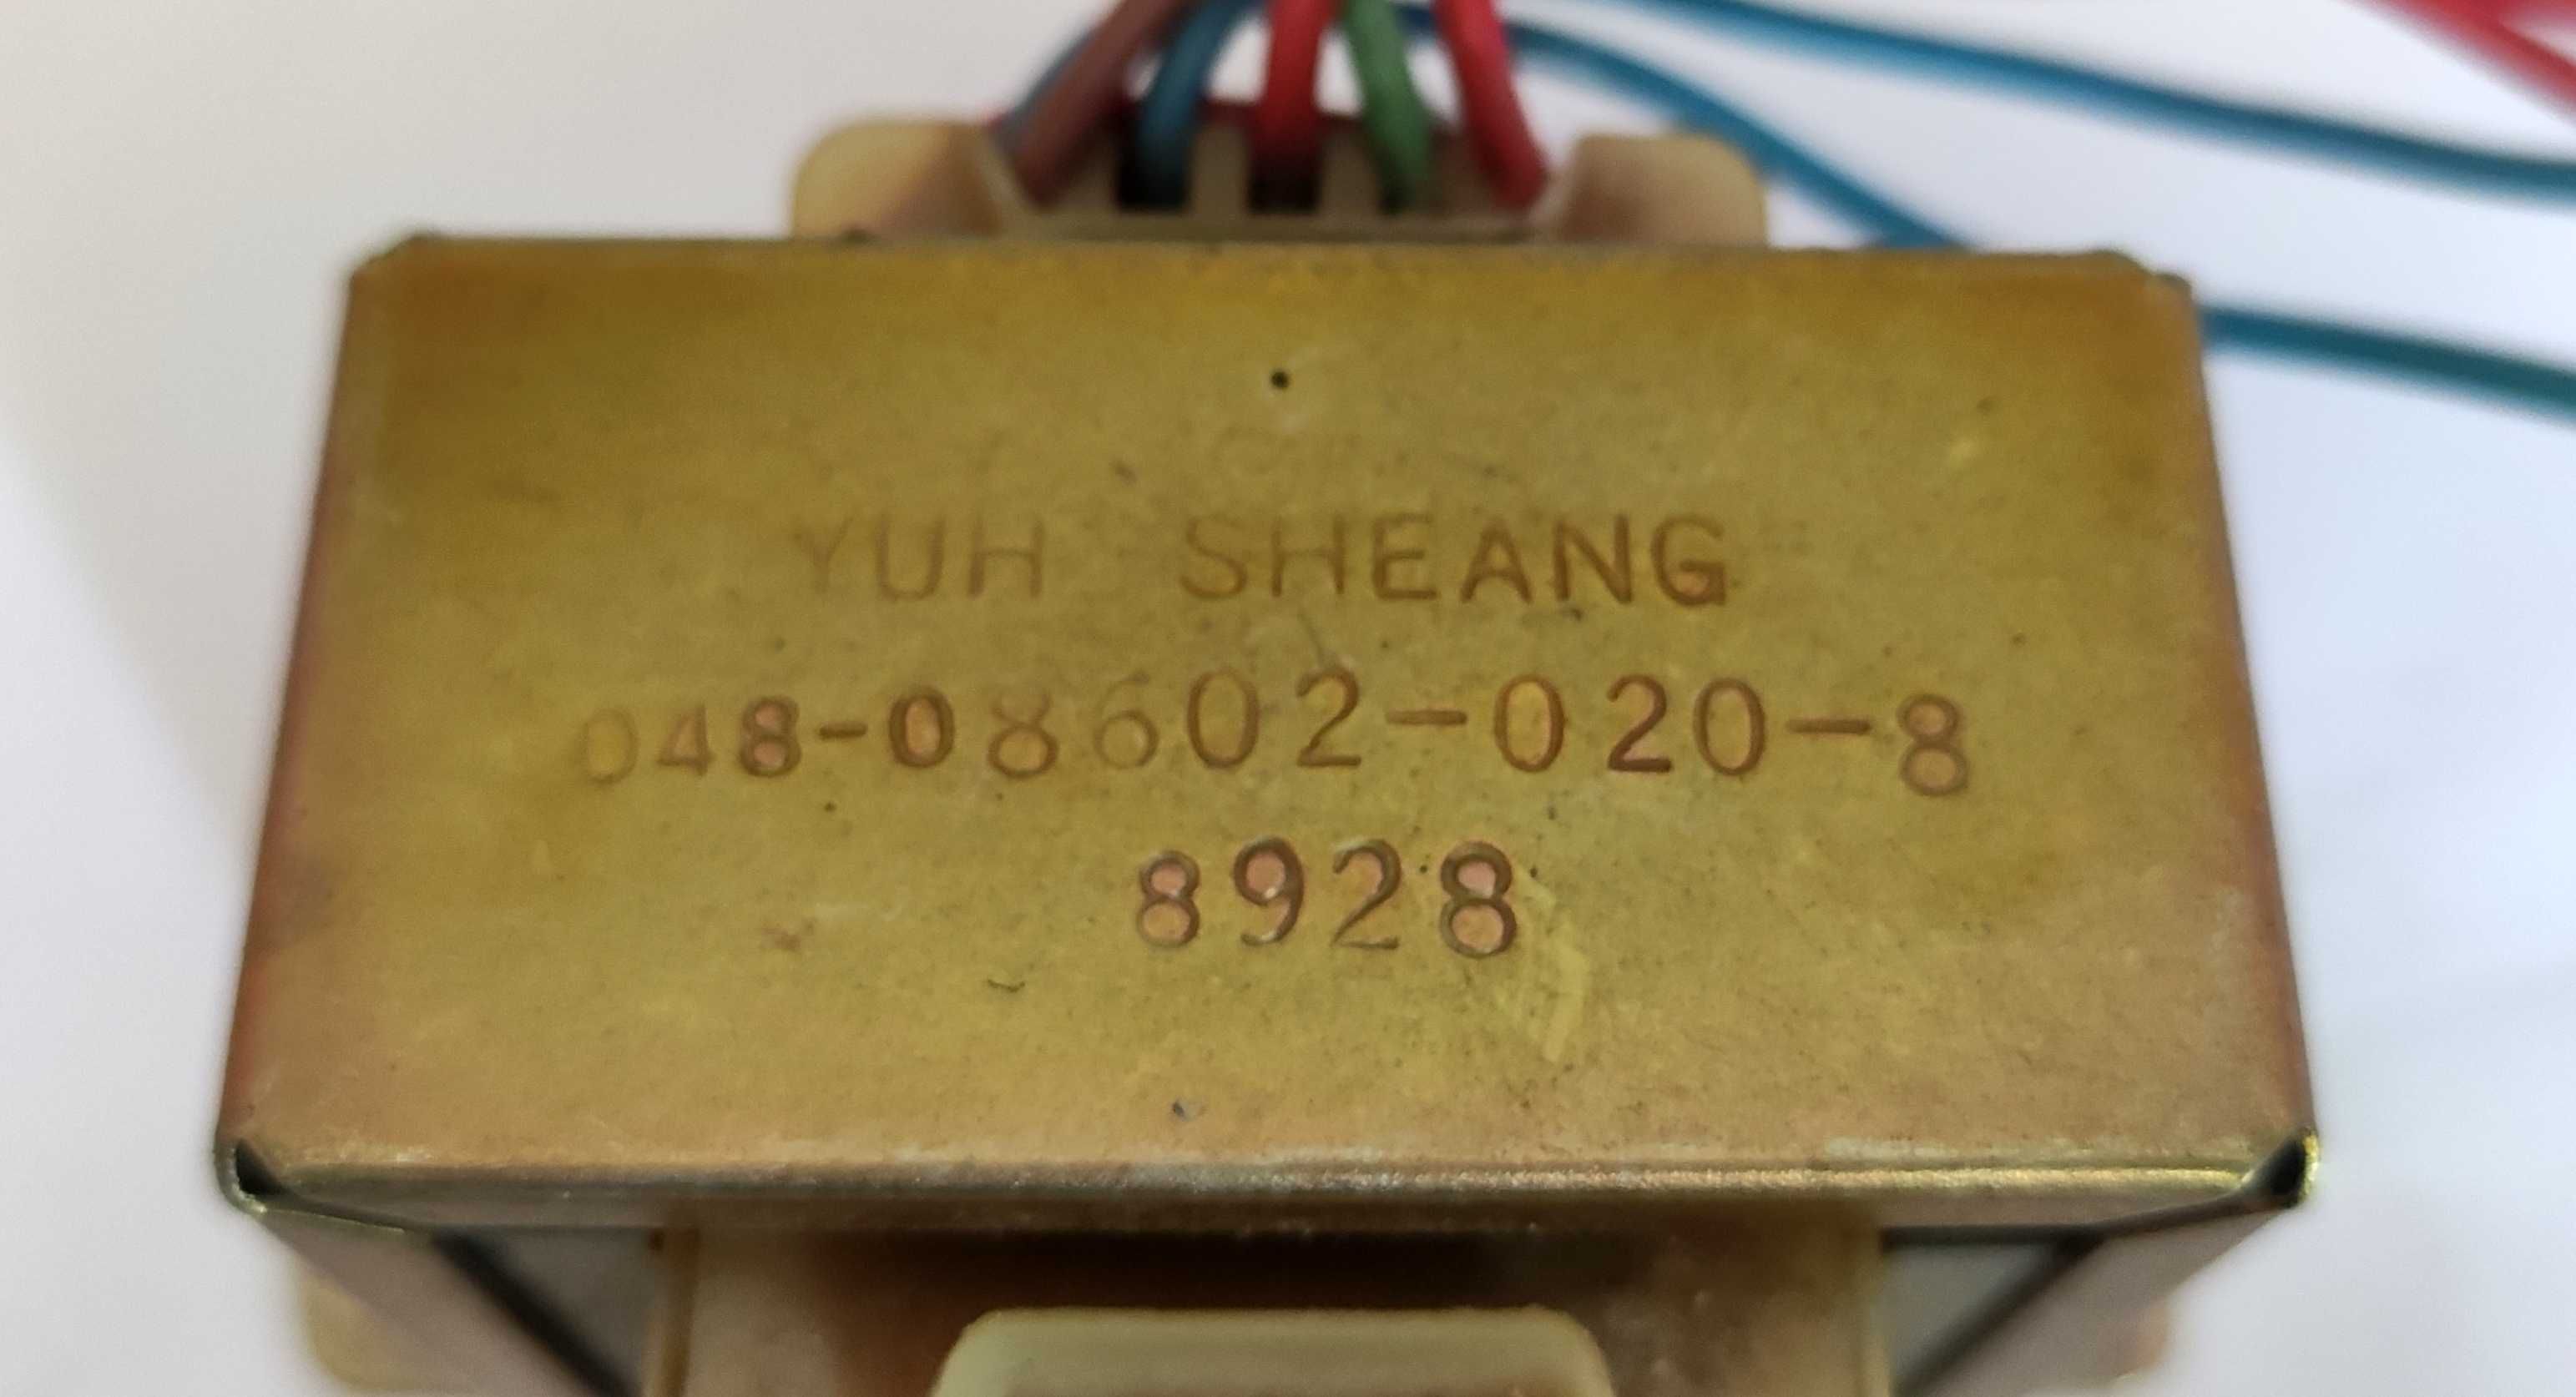 transformator yuh sheang +- 30 v